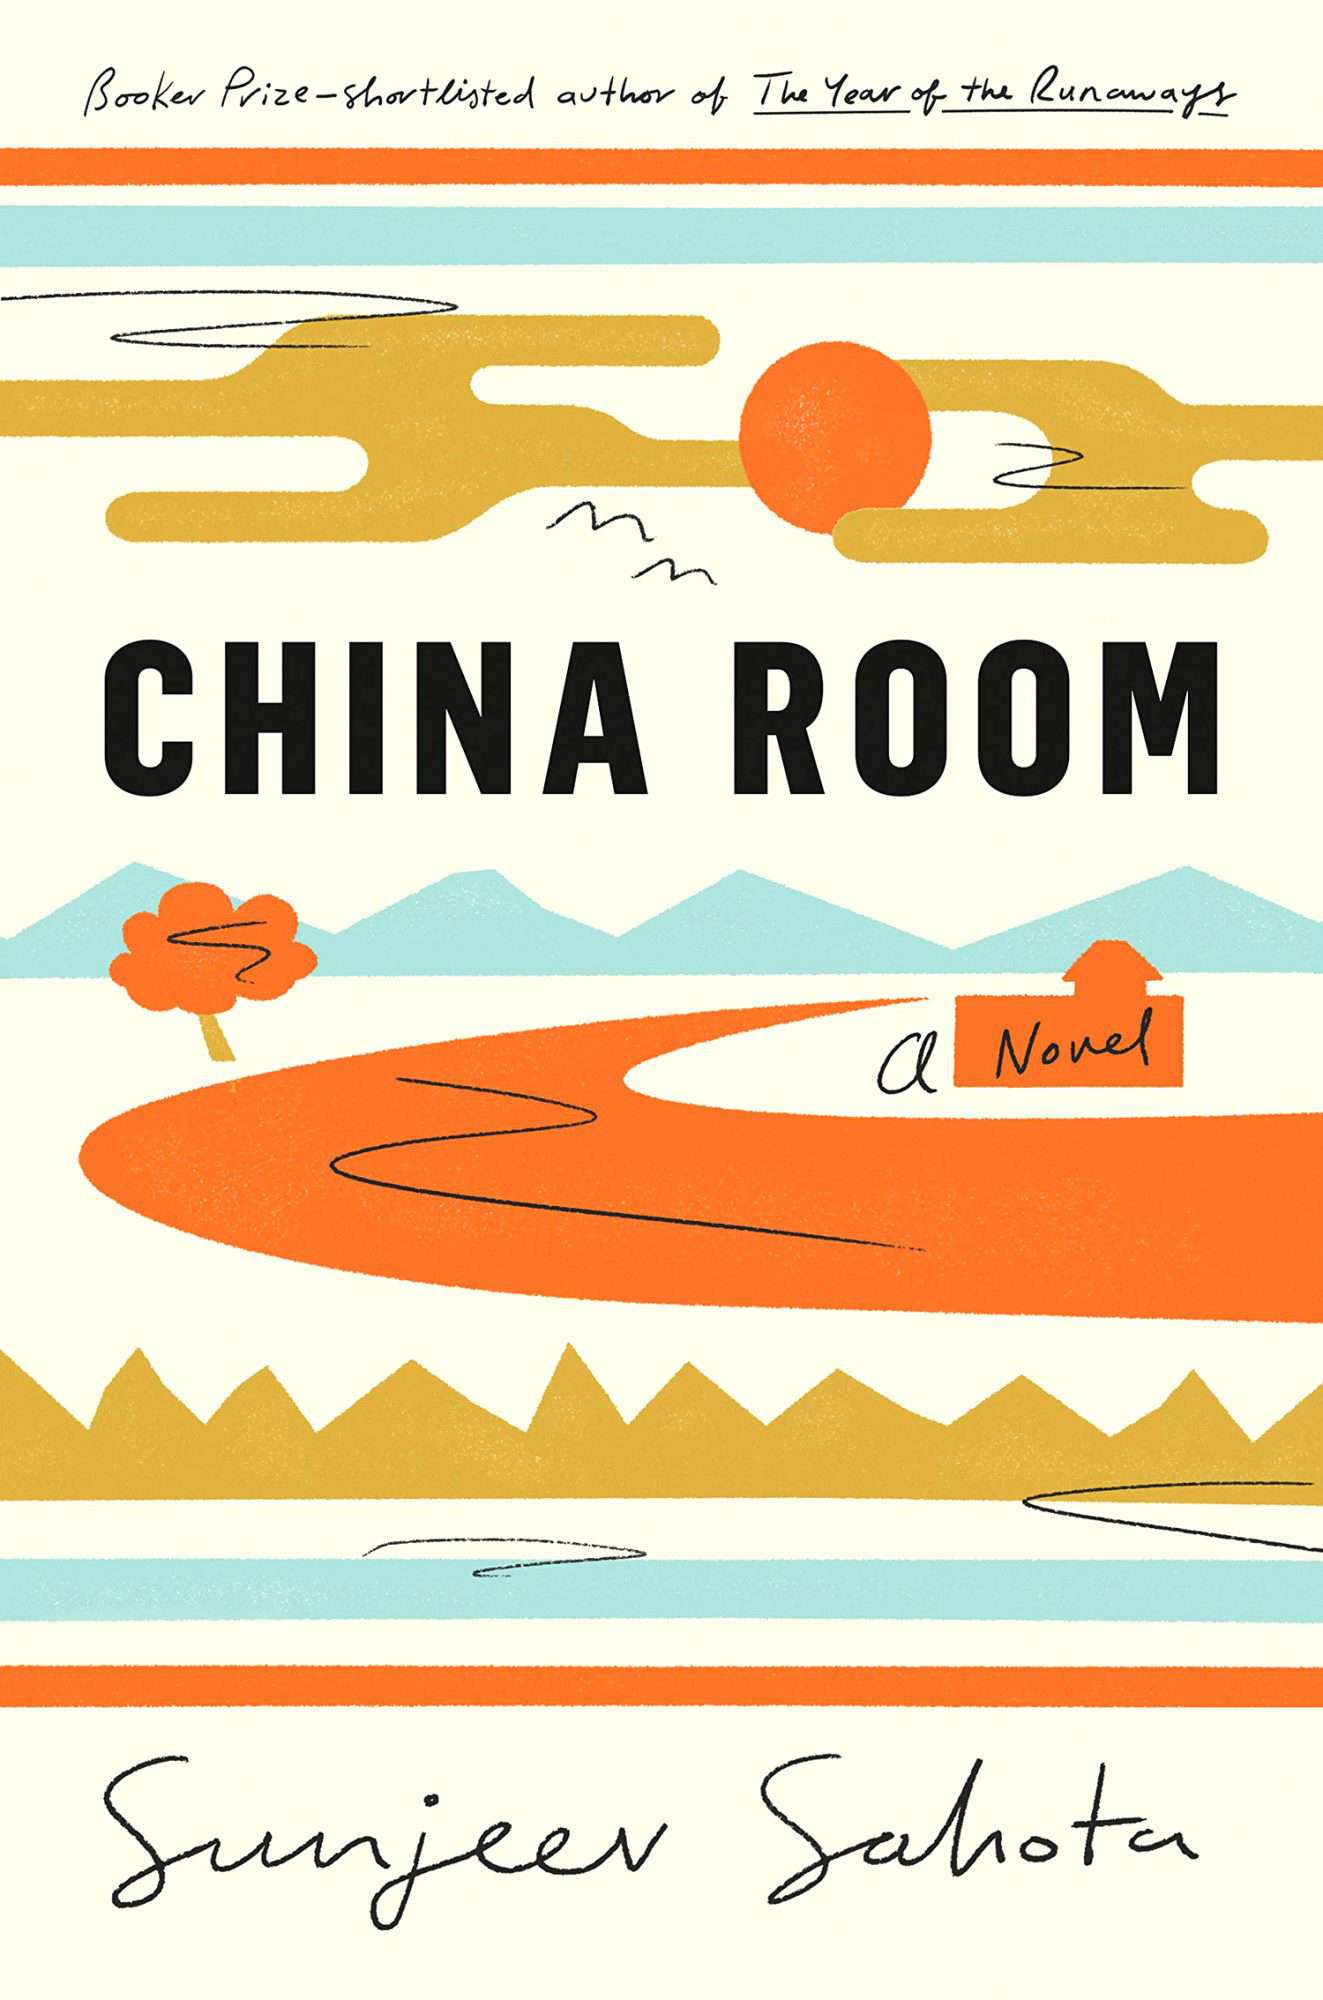 China Room, by Sunjeev Sahota